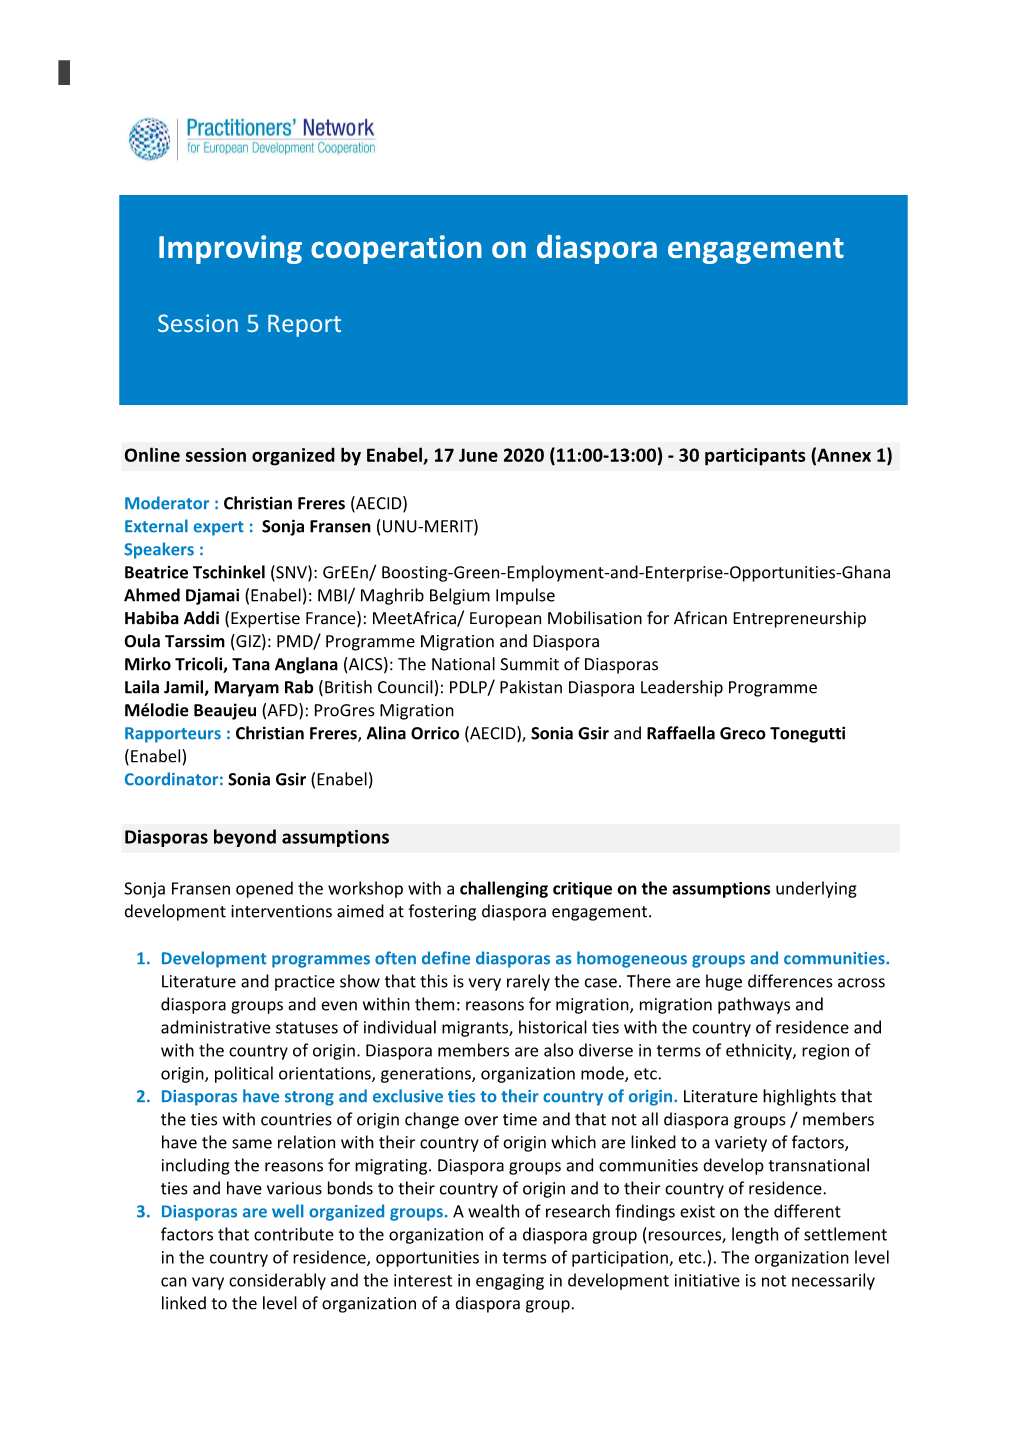 Improving Cooperation on Diaspora Engagement